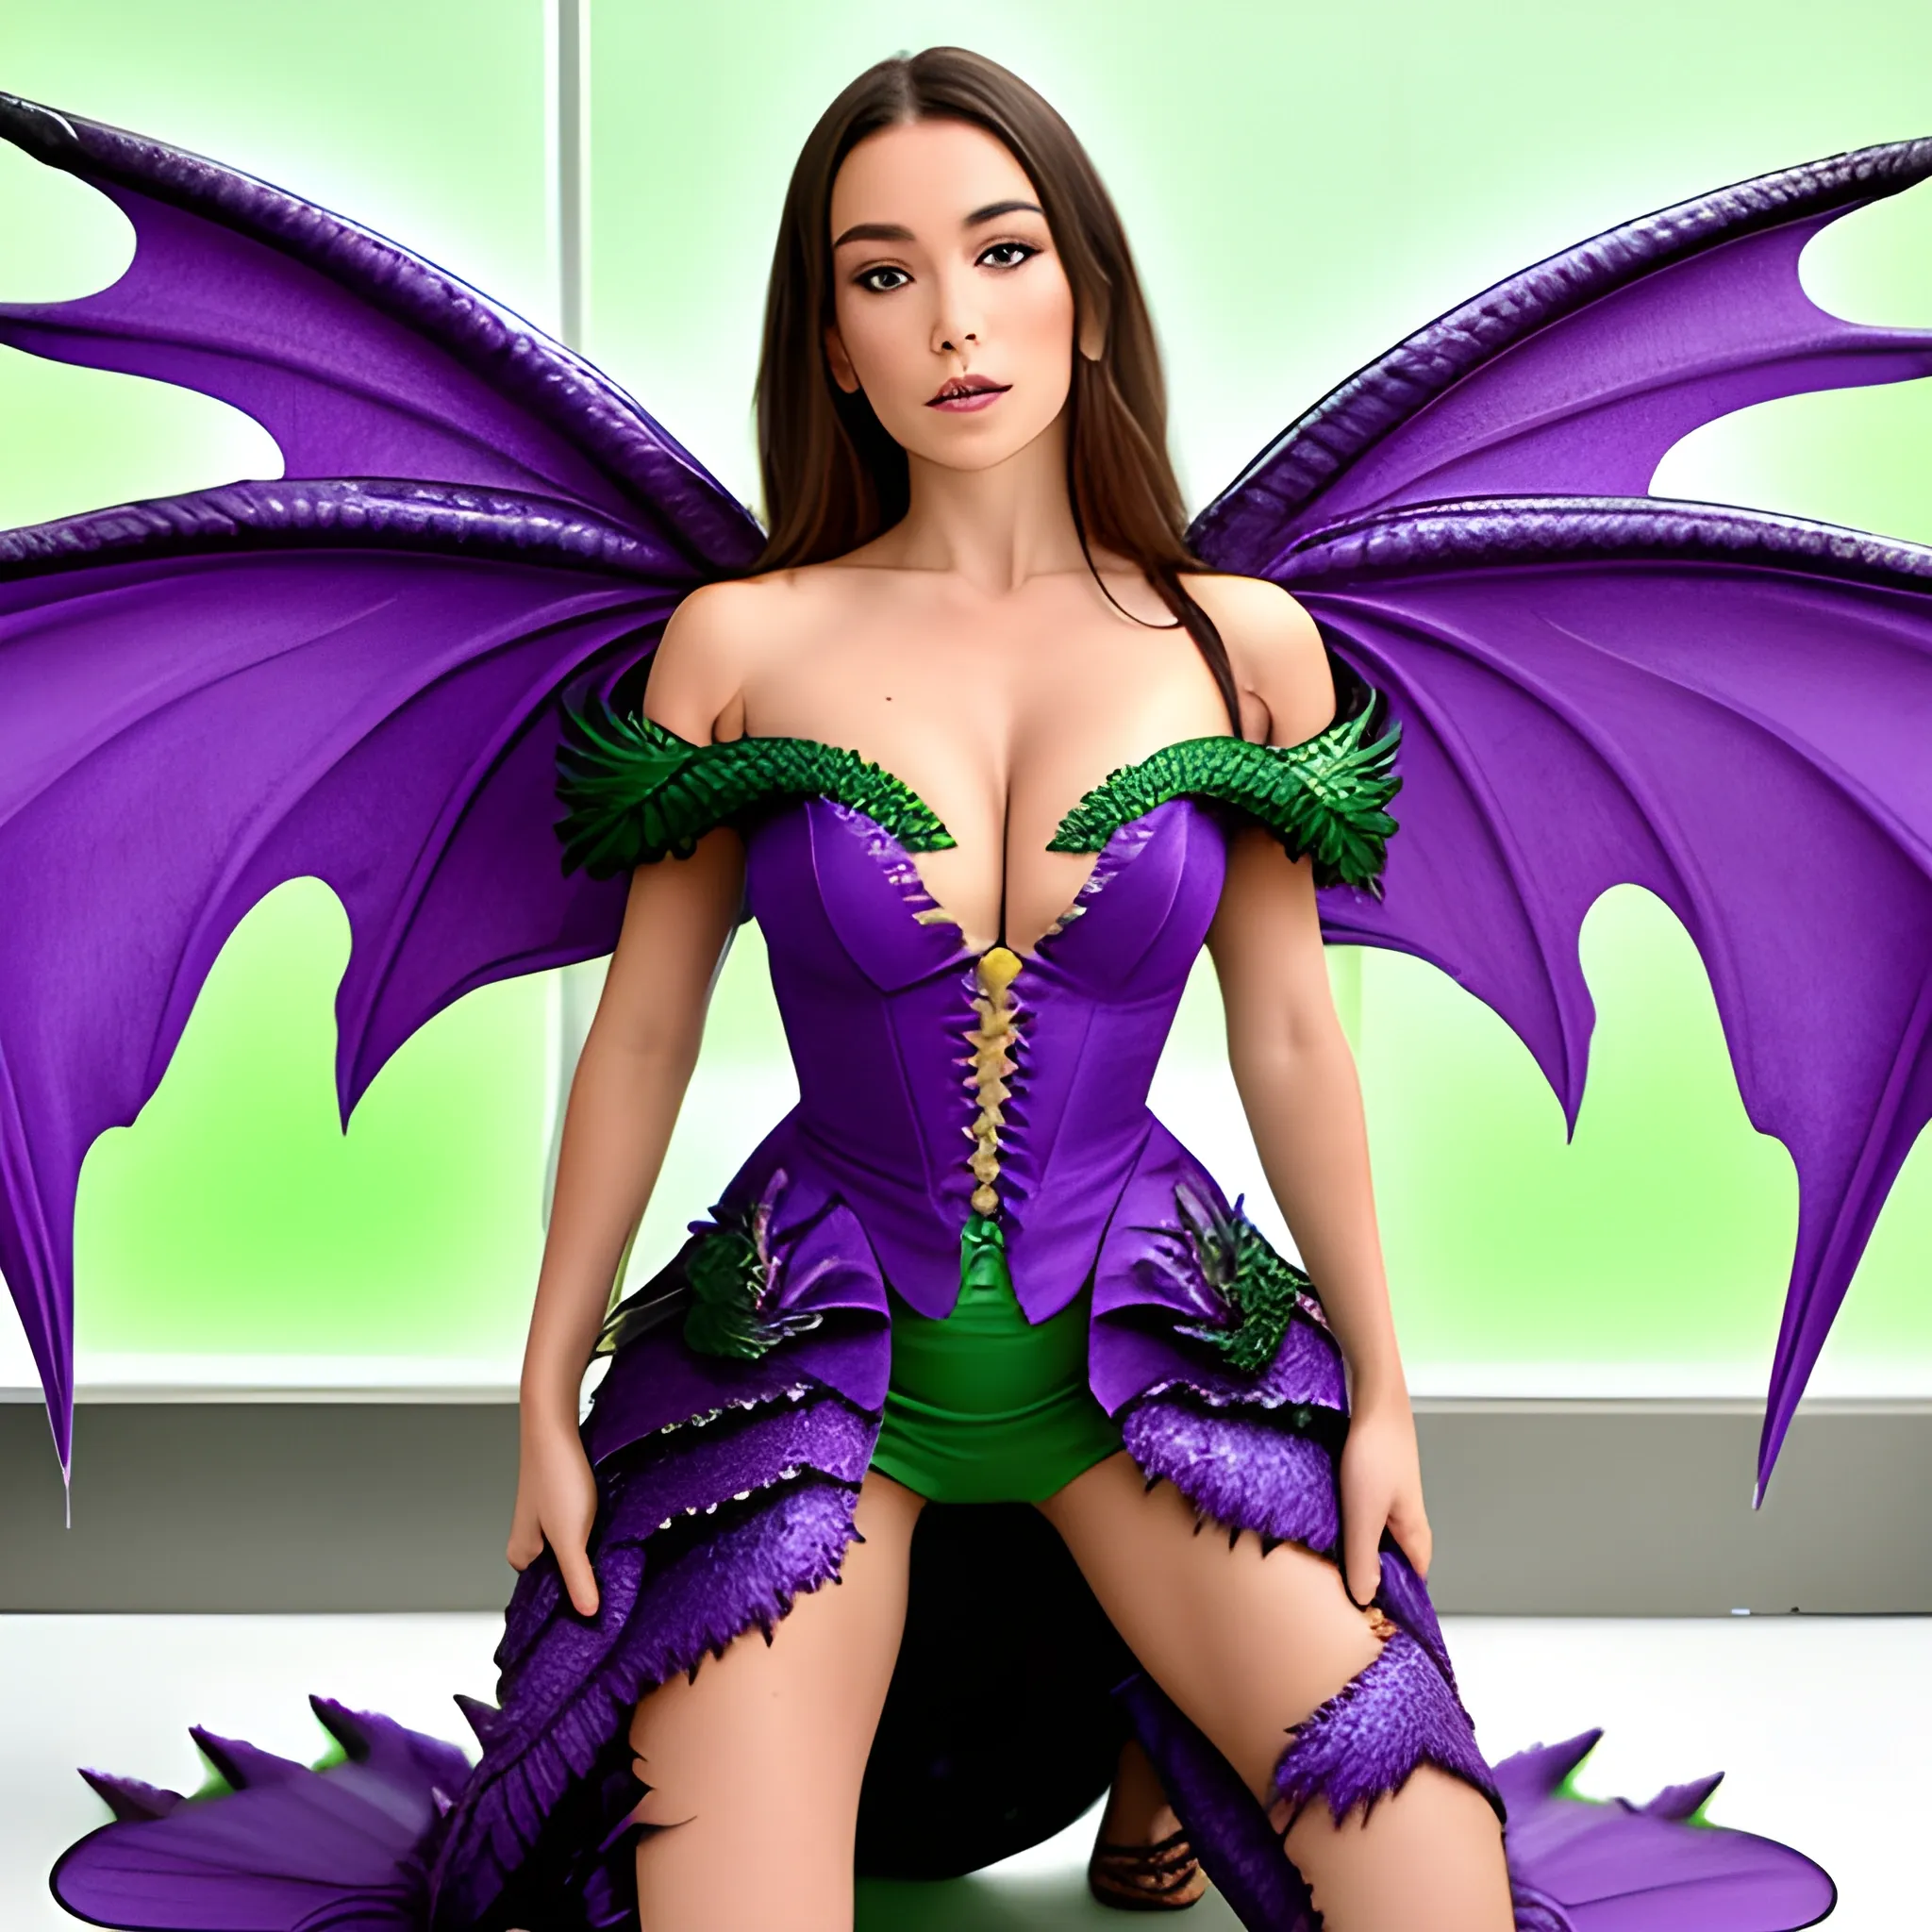 Sophia vegara as kneeling dragon lady, purple wings, green dress